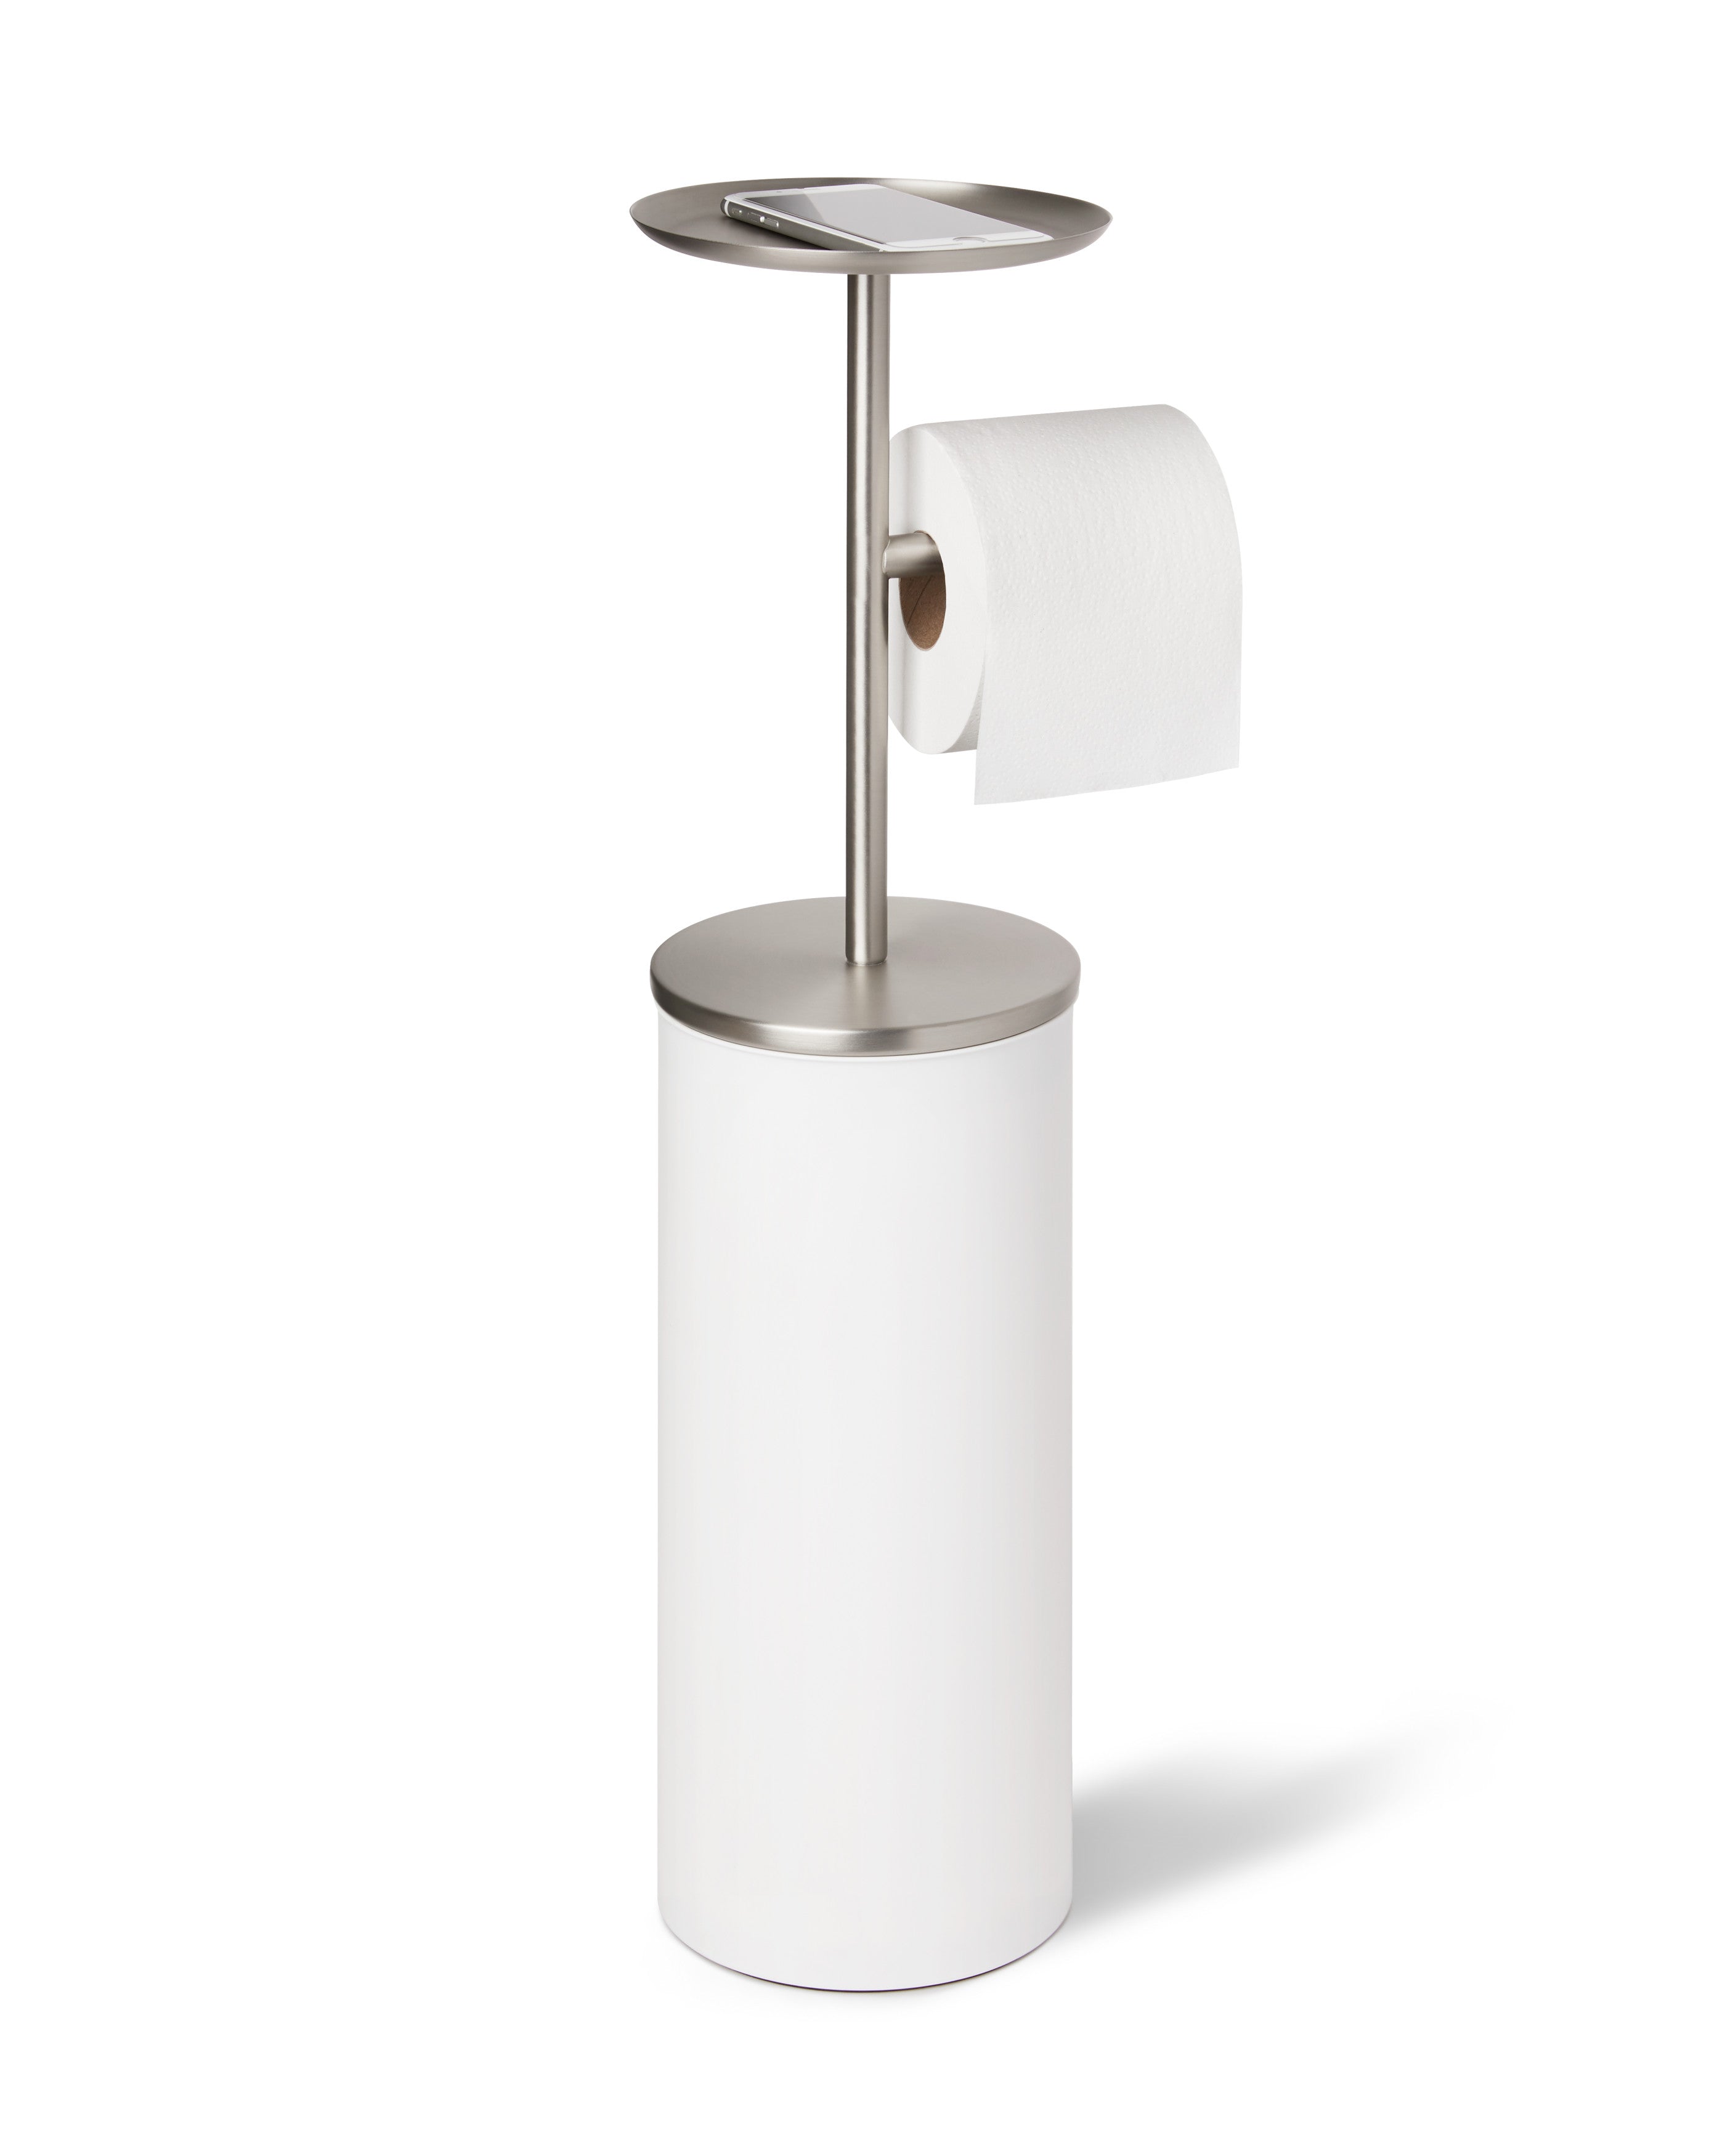 Portaloo Toilet Paper | & Stylish Convenient - Umbra Stand